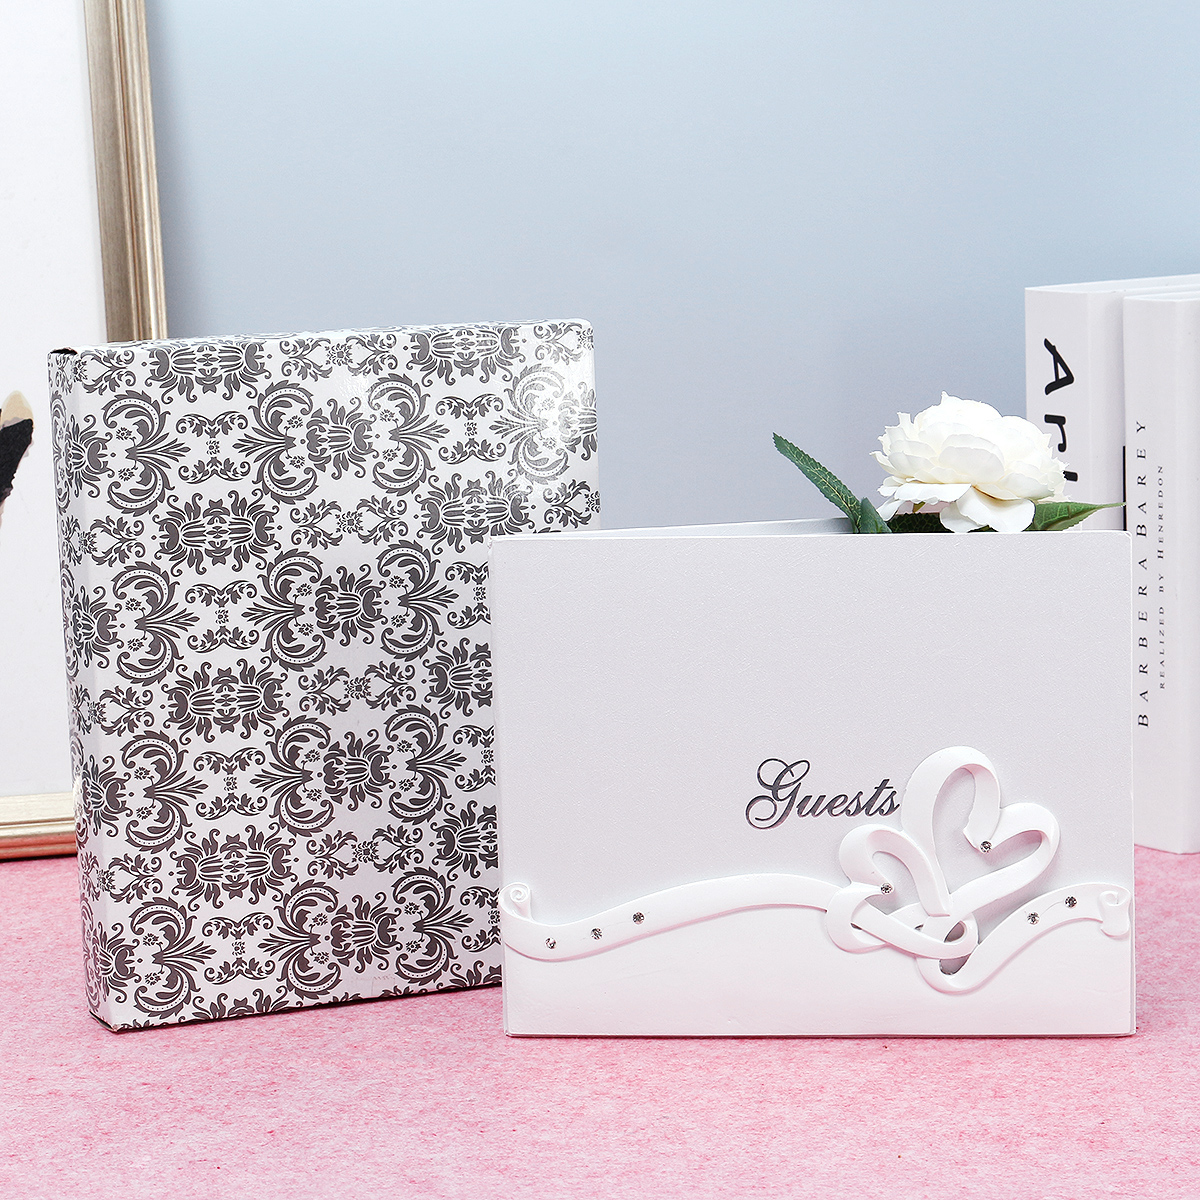 

25 x 20cm Wedding Guest Book Decor Supplies Wedding Party Signature Book Elegant Bride Bridegroom Butterfly Resin